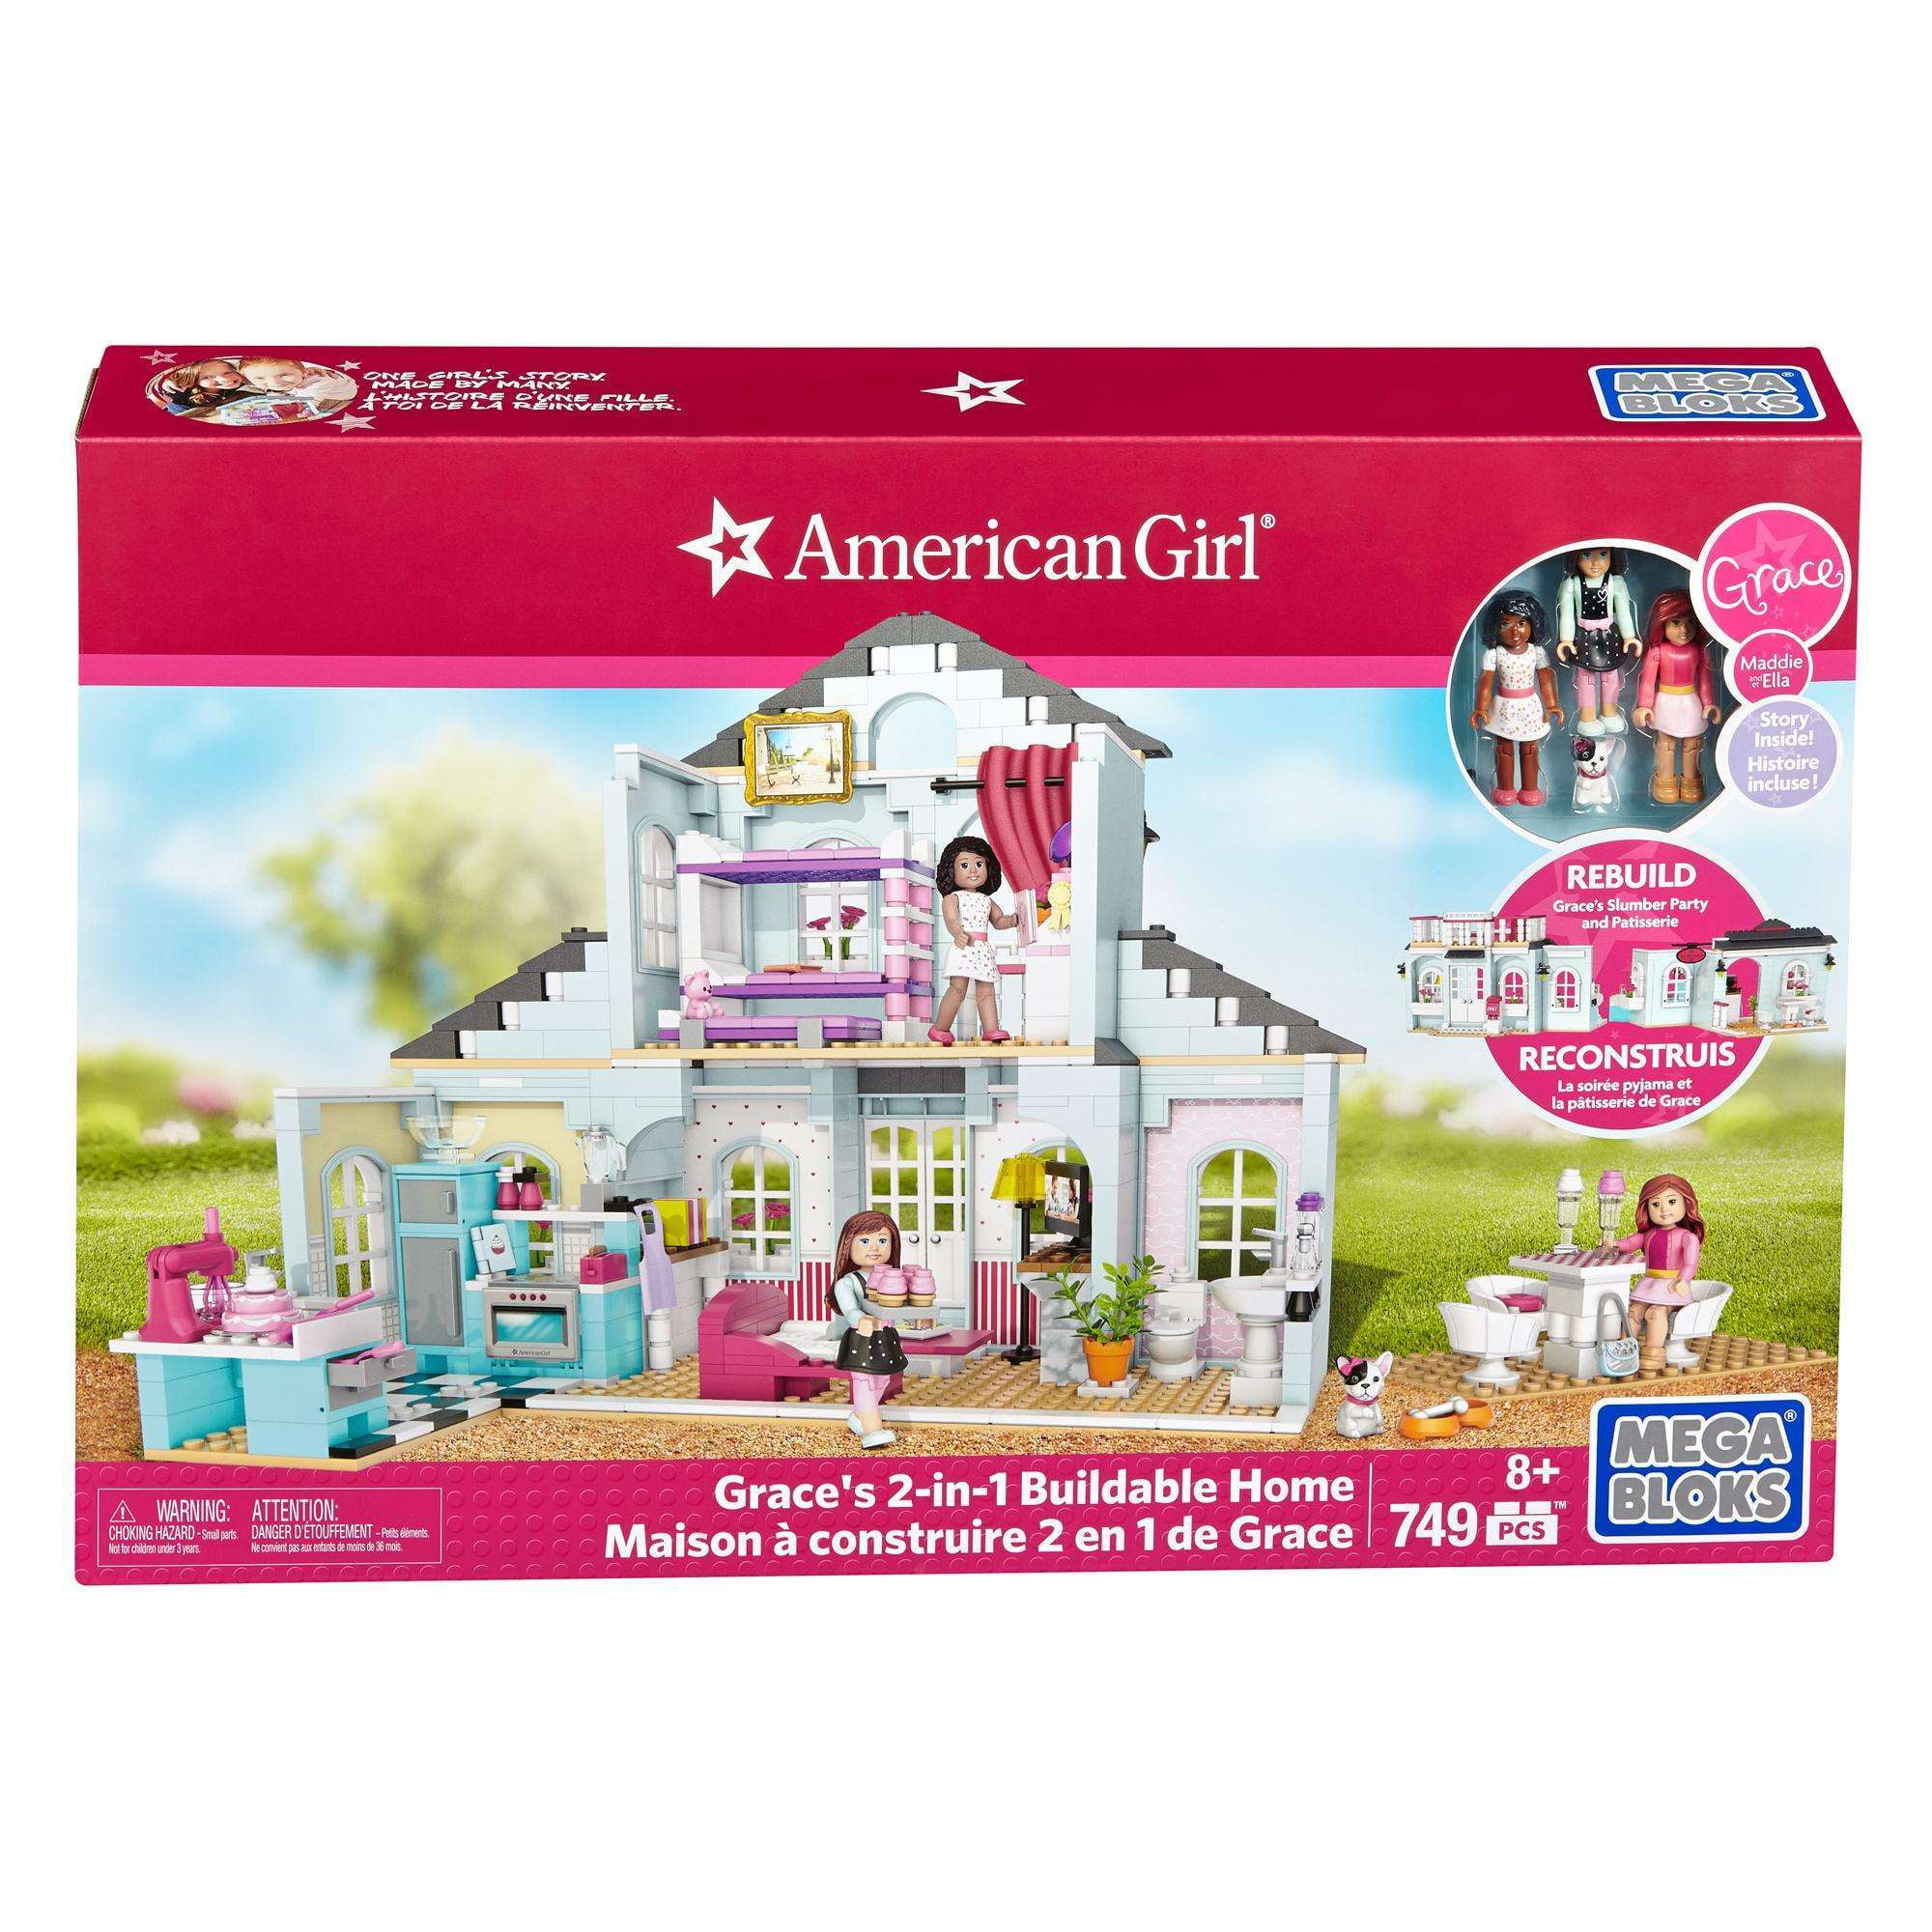 DPK87 Mega Bloks American Girl Grace's 2-in-1 Buildable Home for sale online 